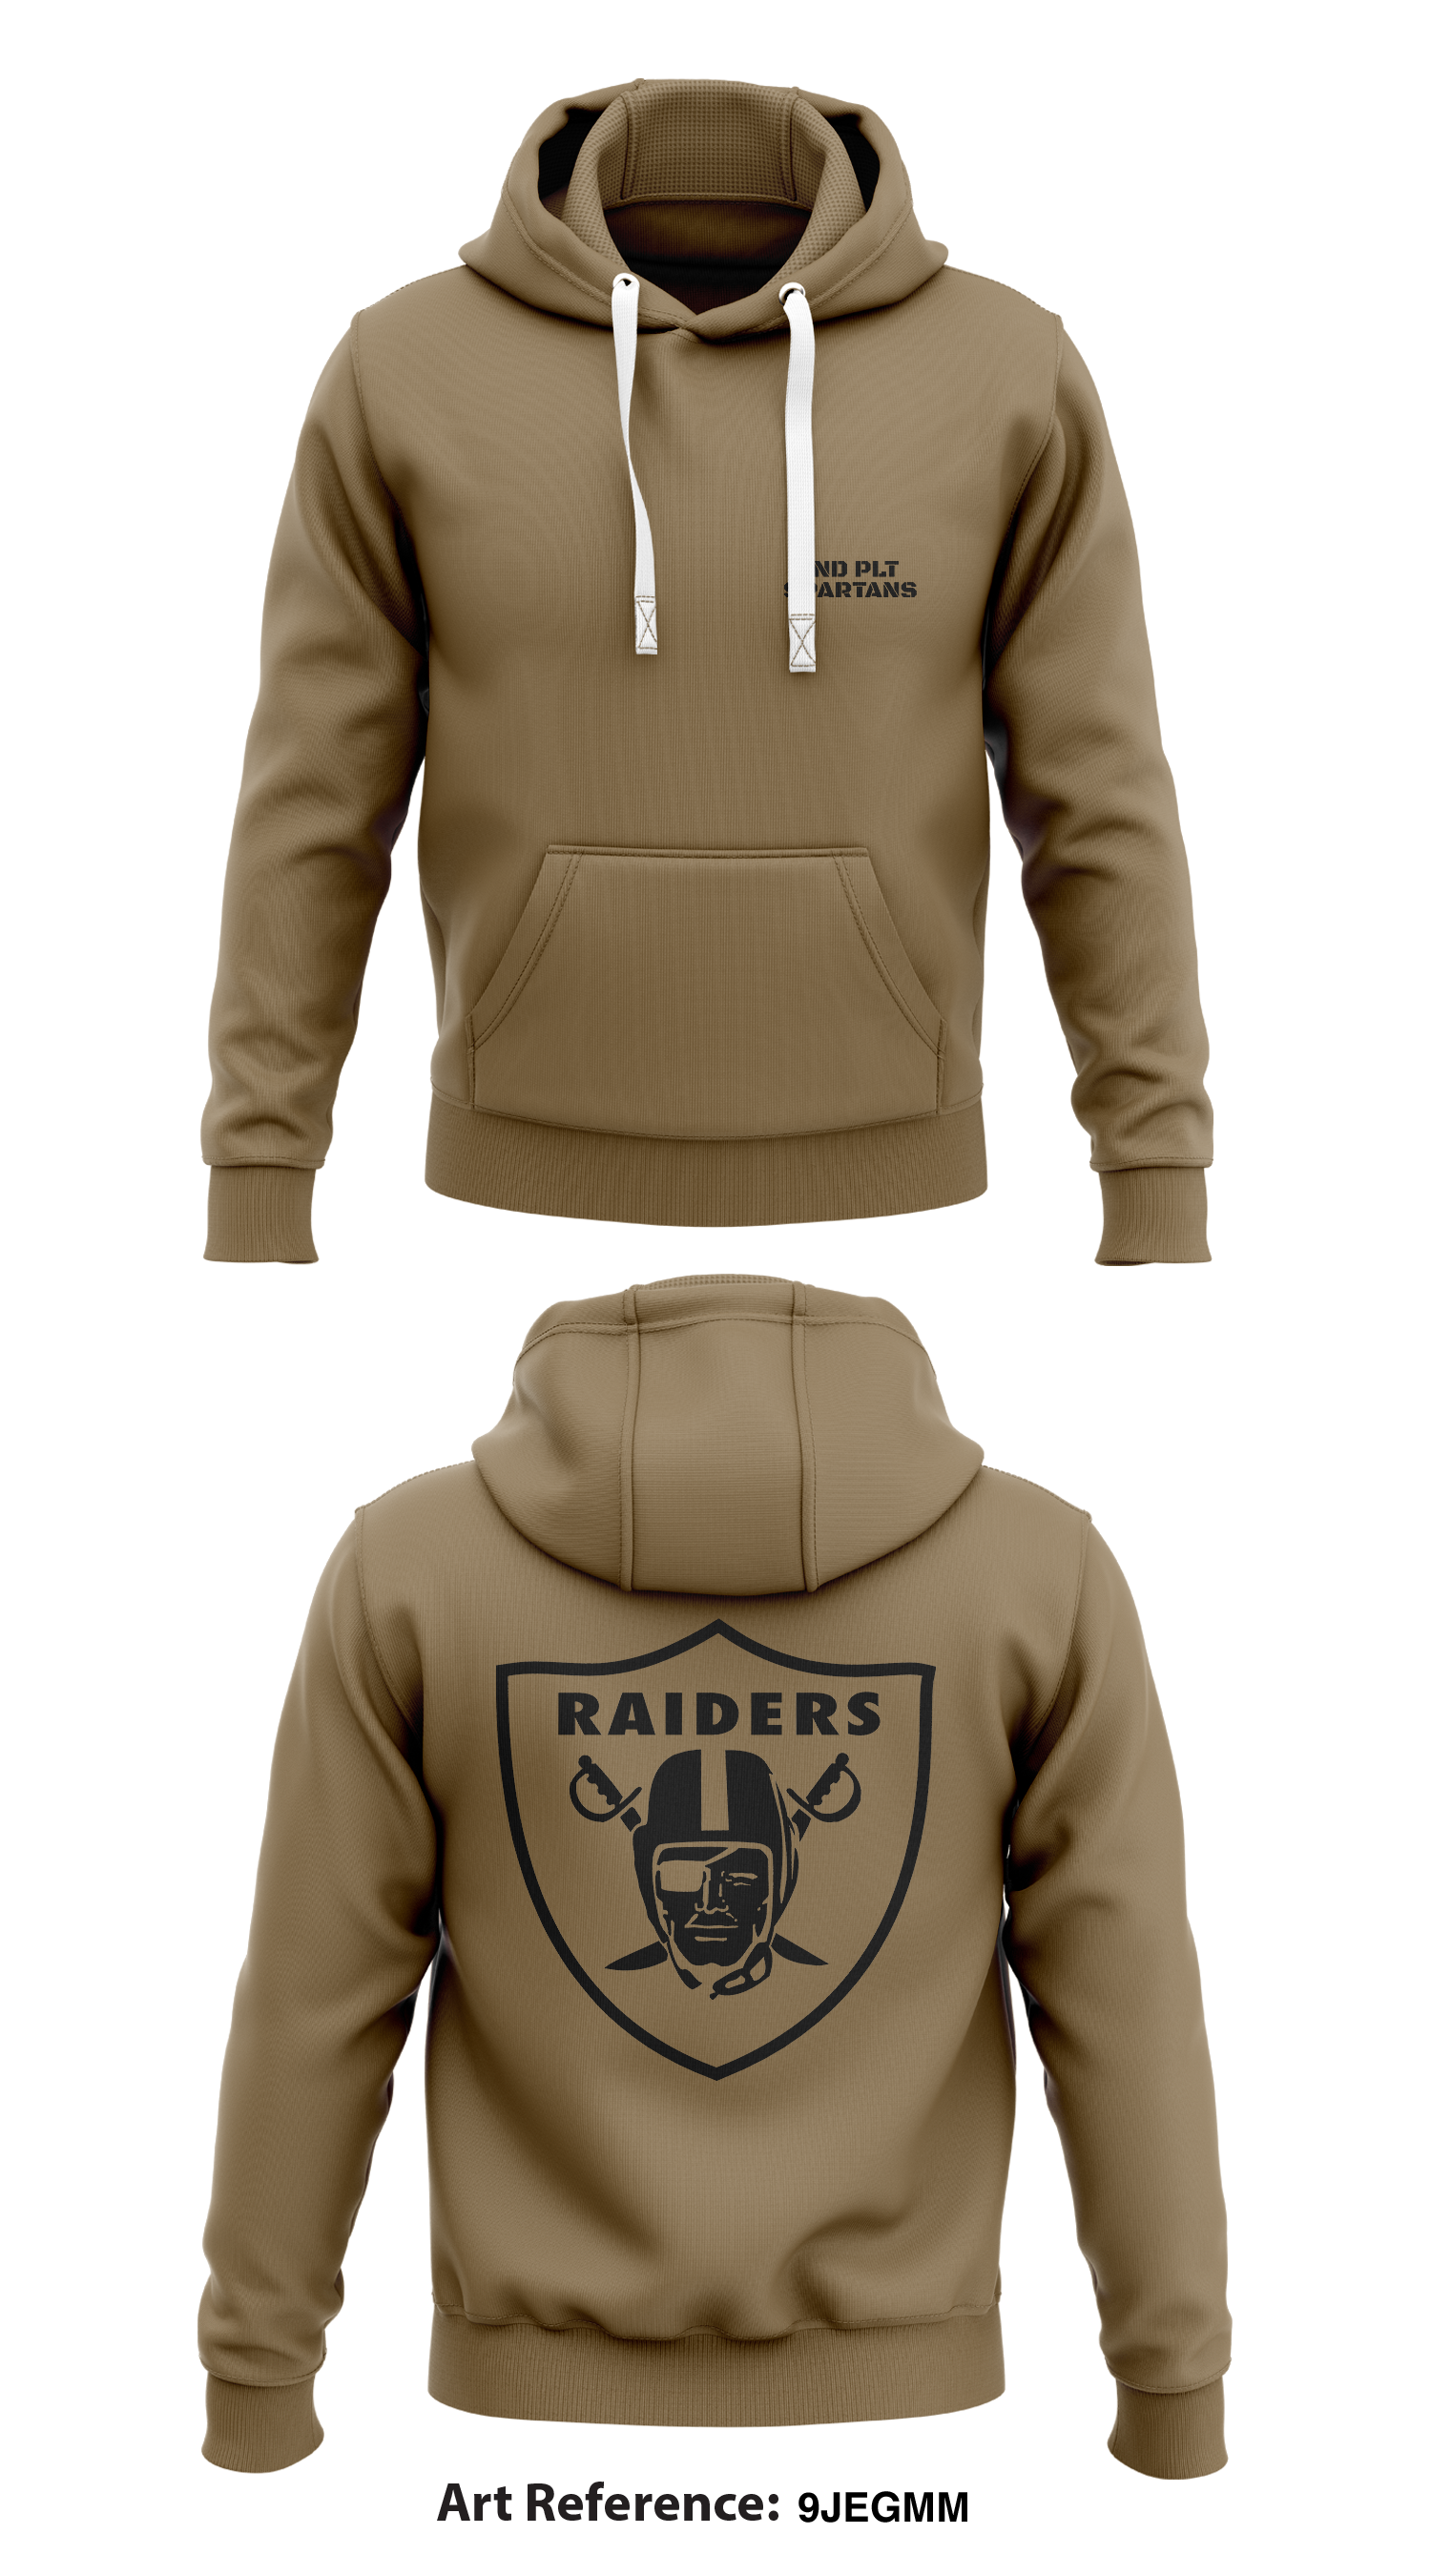 raider salute to service hoodie